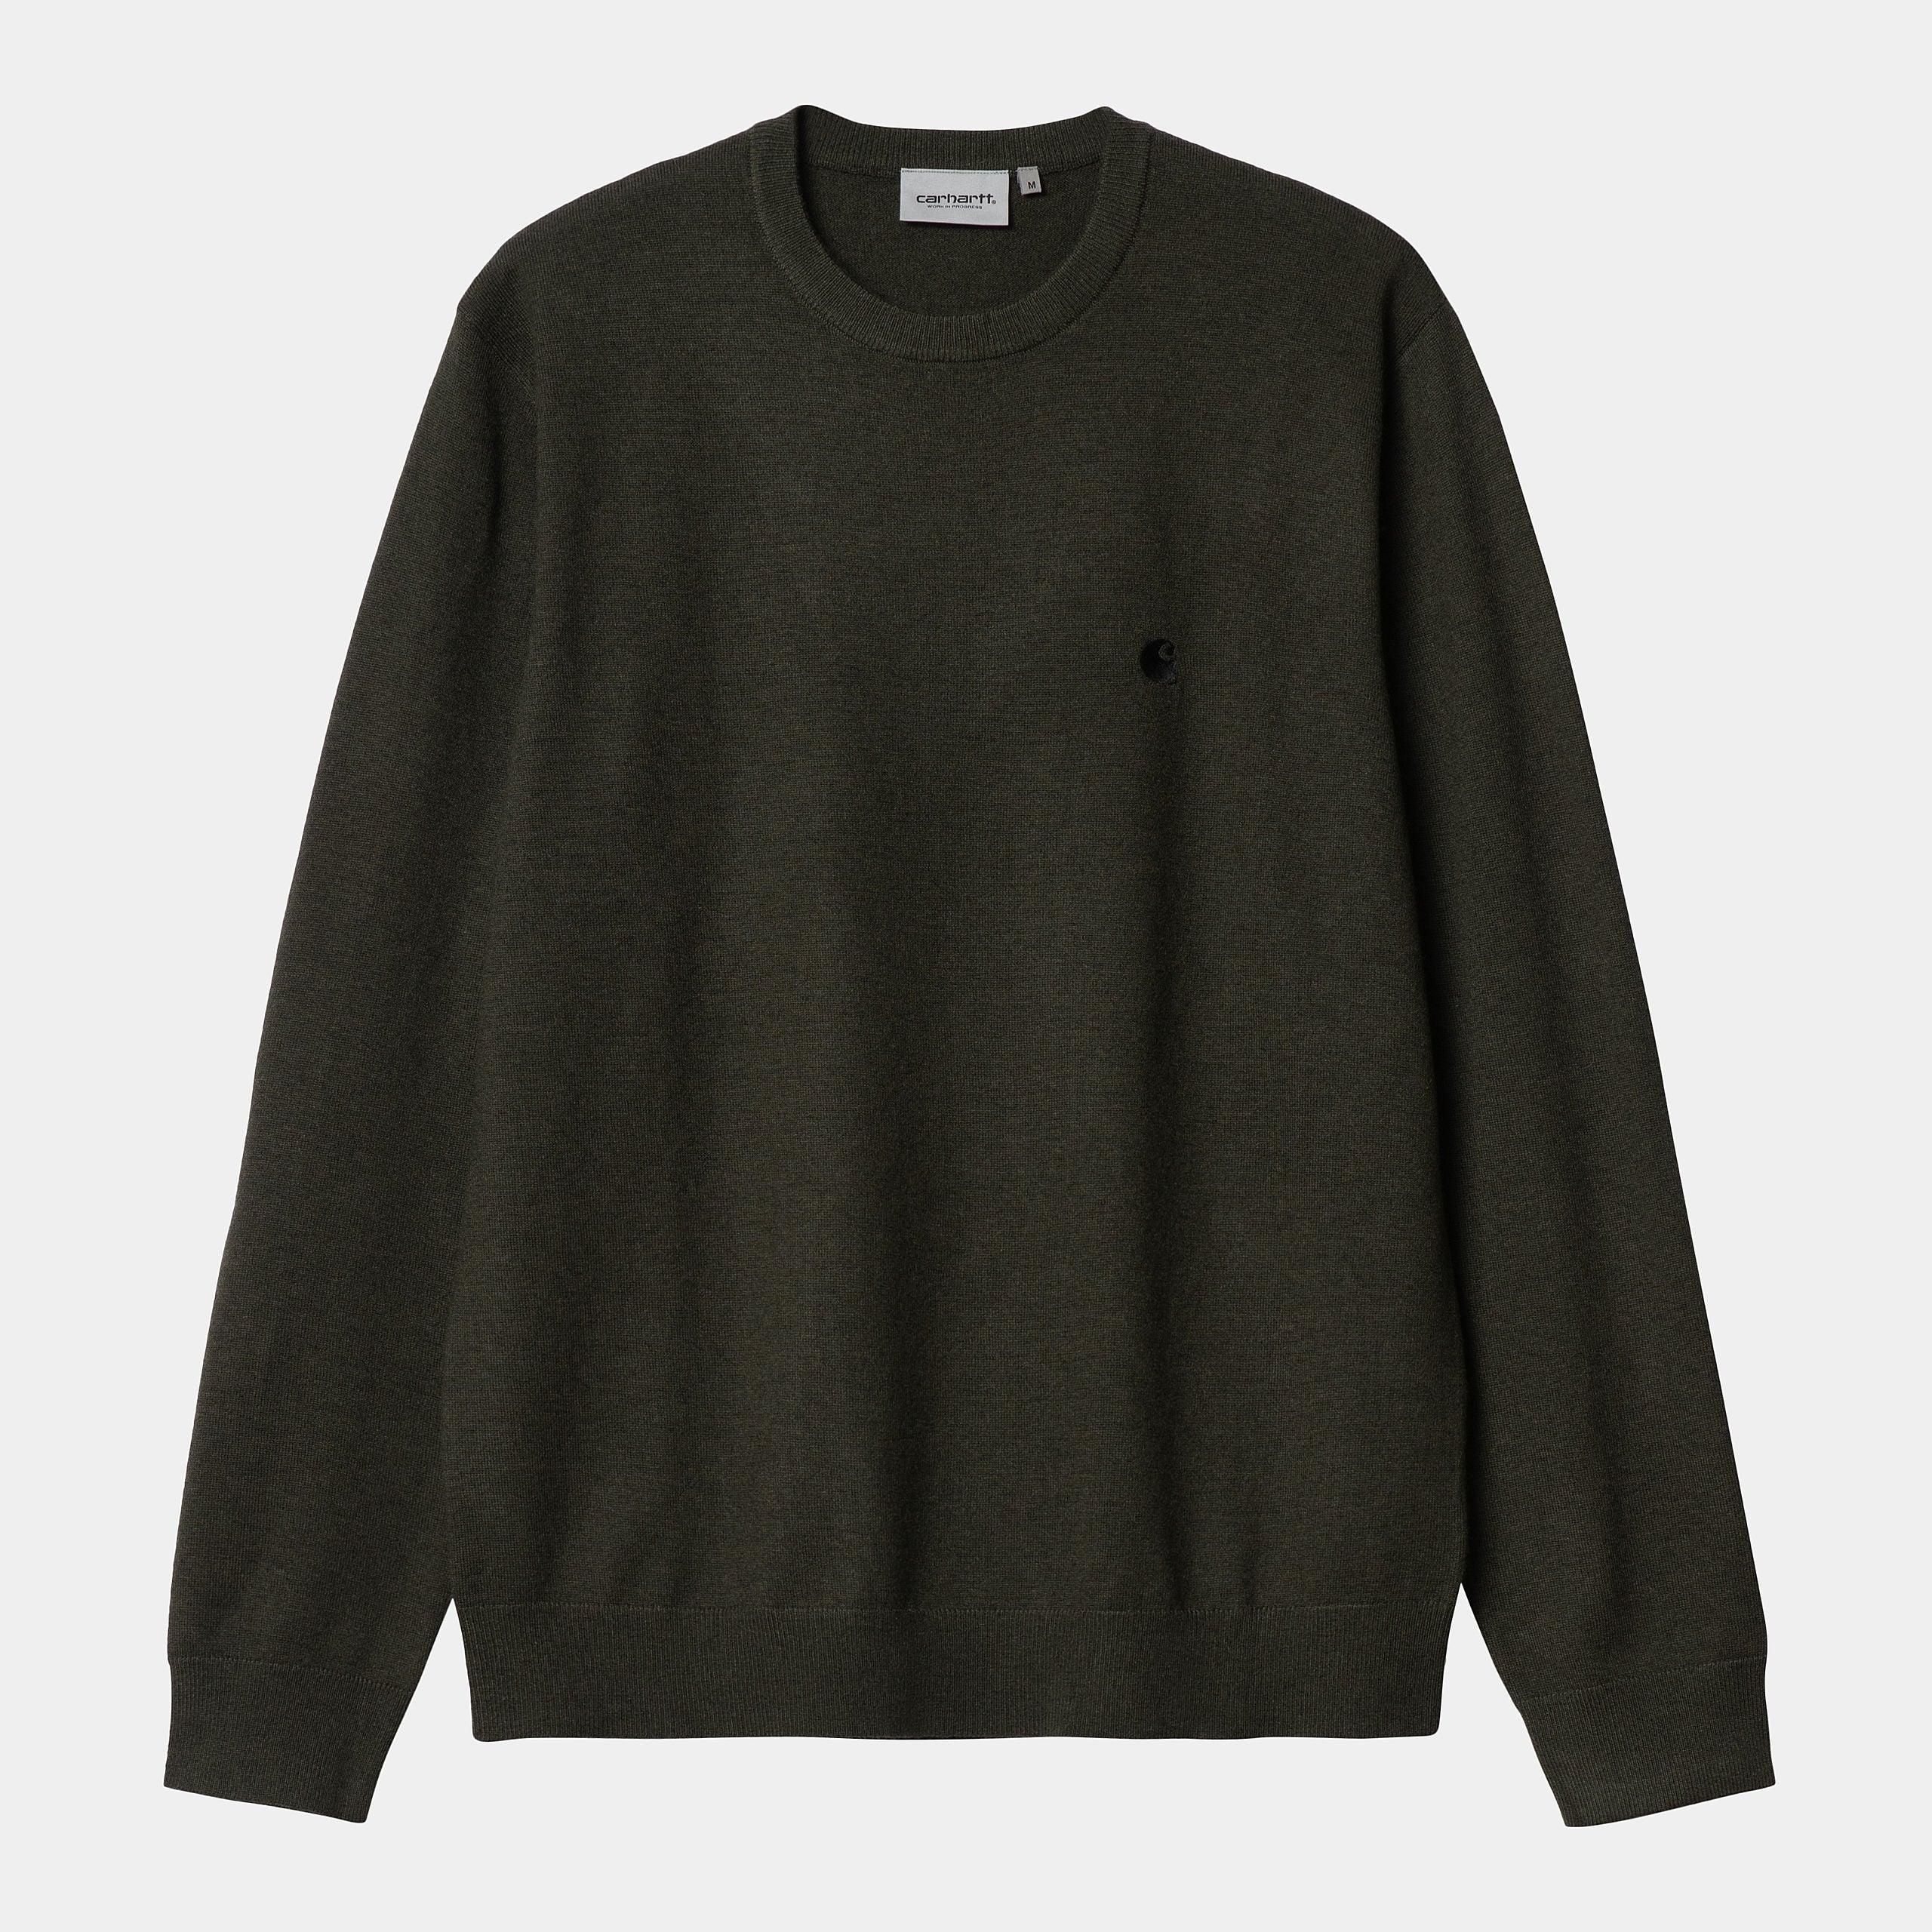 Carhartt WIP Madison Sweater 80/20% Lambswool/Nylon, 12 gauge, Plant/Black M L XL